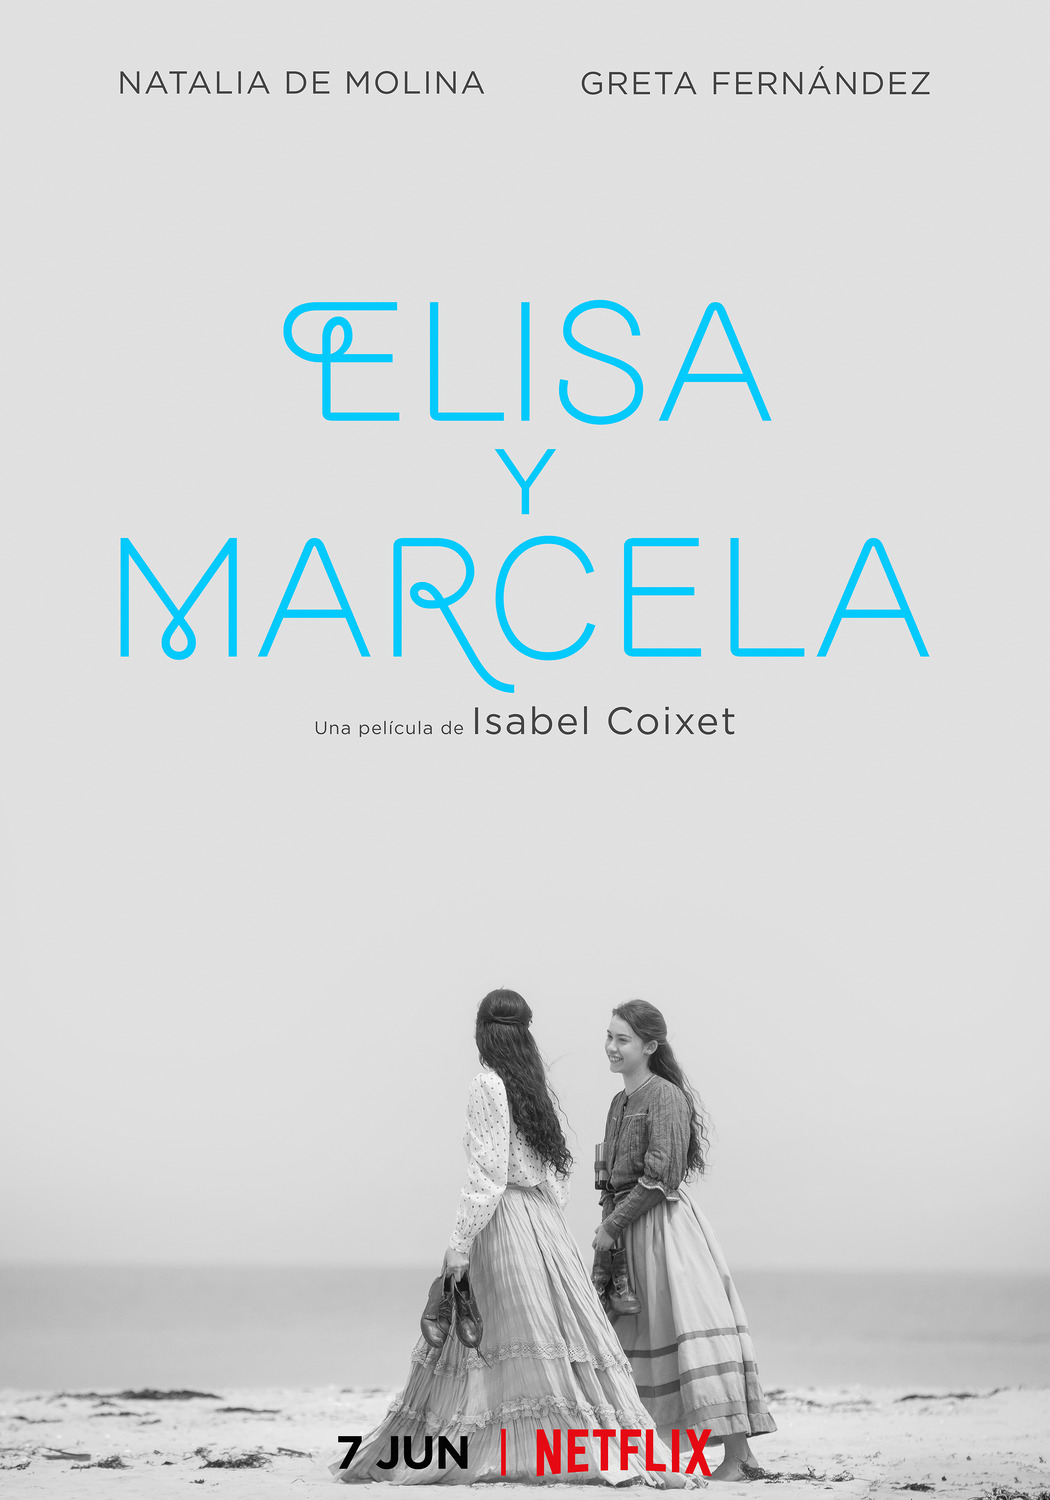 Extra Large TV Poster Image for Elisa y Marcela (#1 of 3)